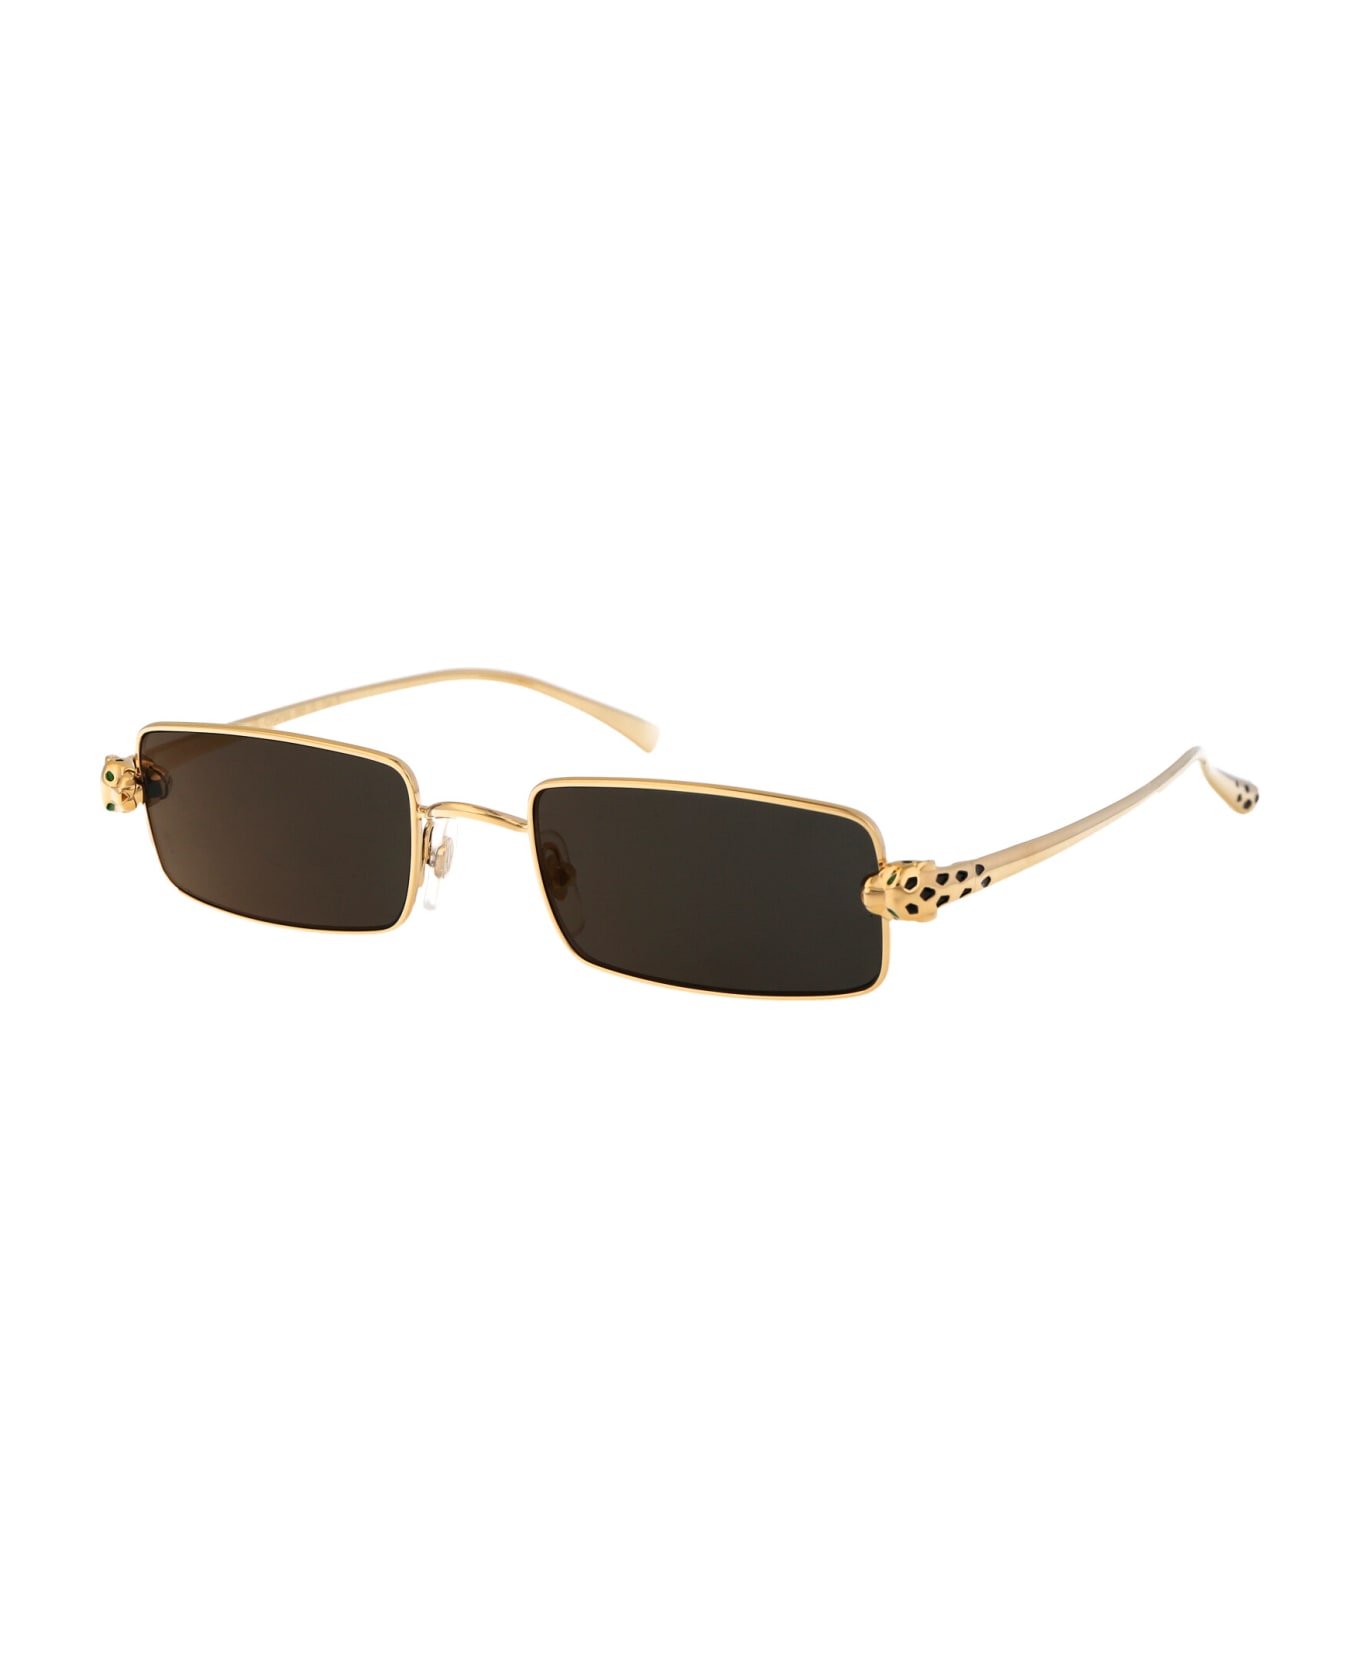 Cartier Eyewear Ct0473s Sunglasses - 001 GOLD GOLD GREY サングラス